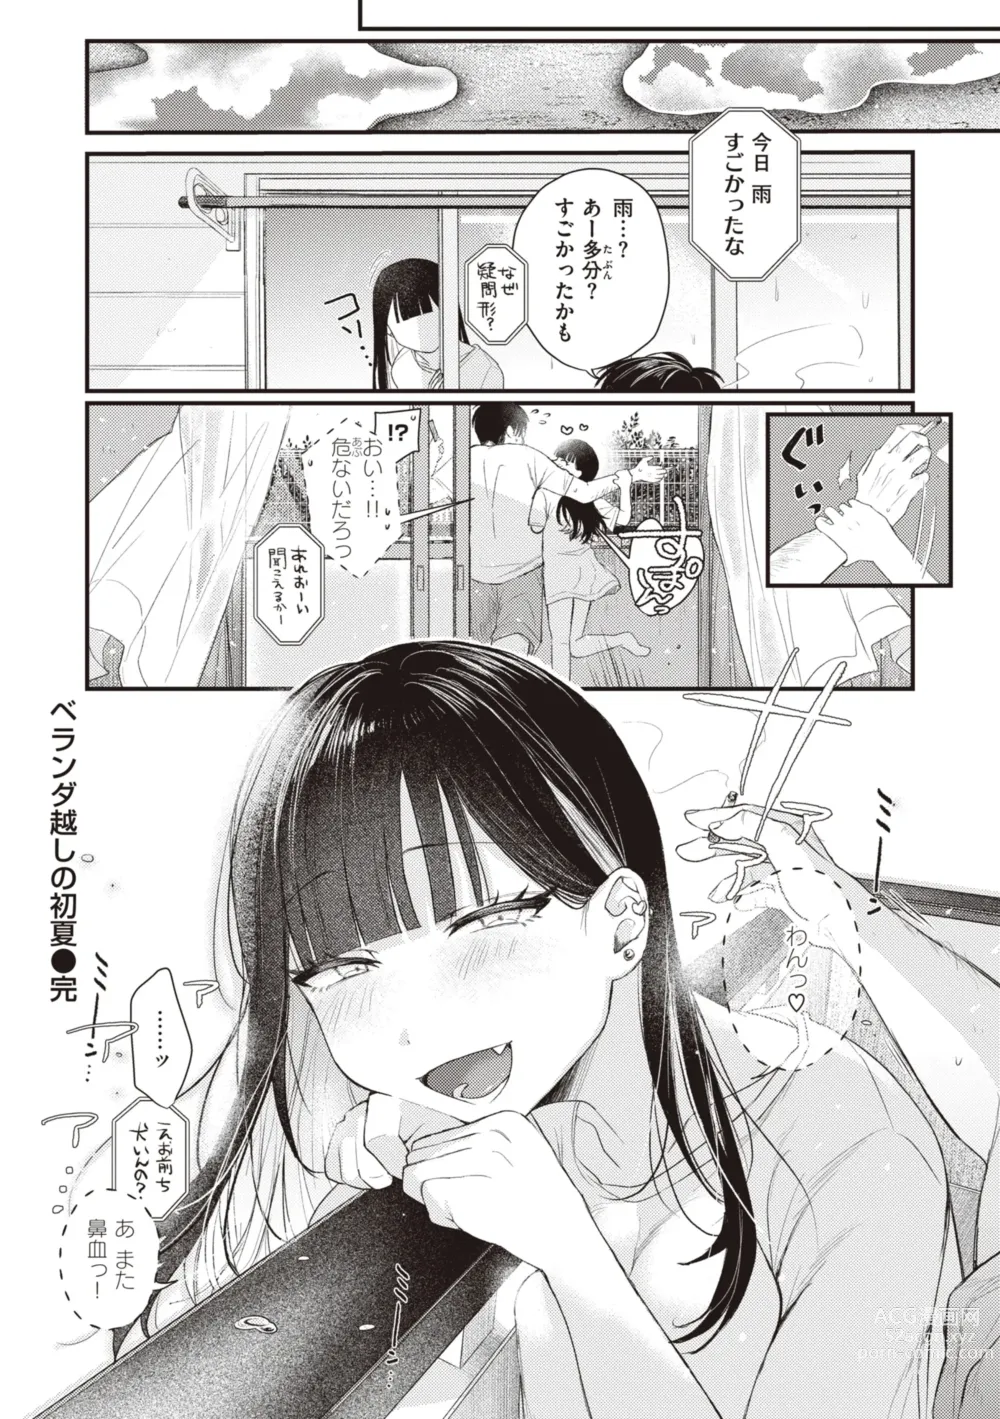 Page 162 of manga Seishun -Sexual Seasons-